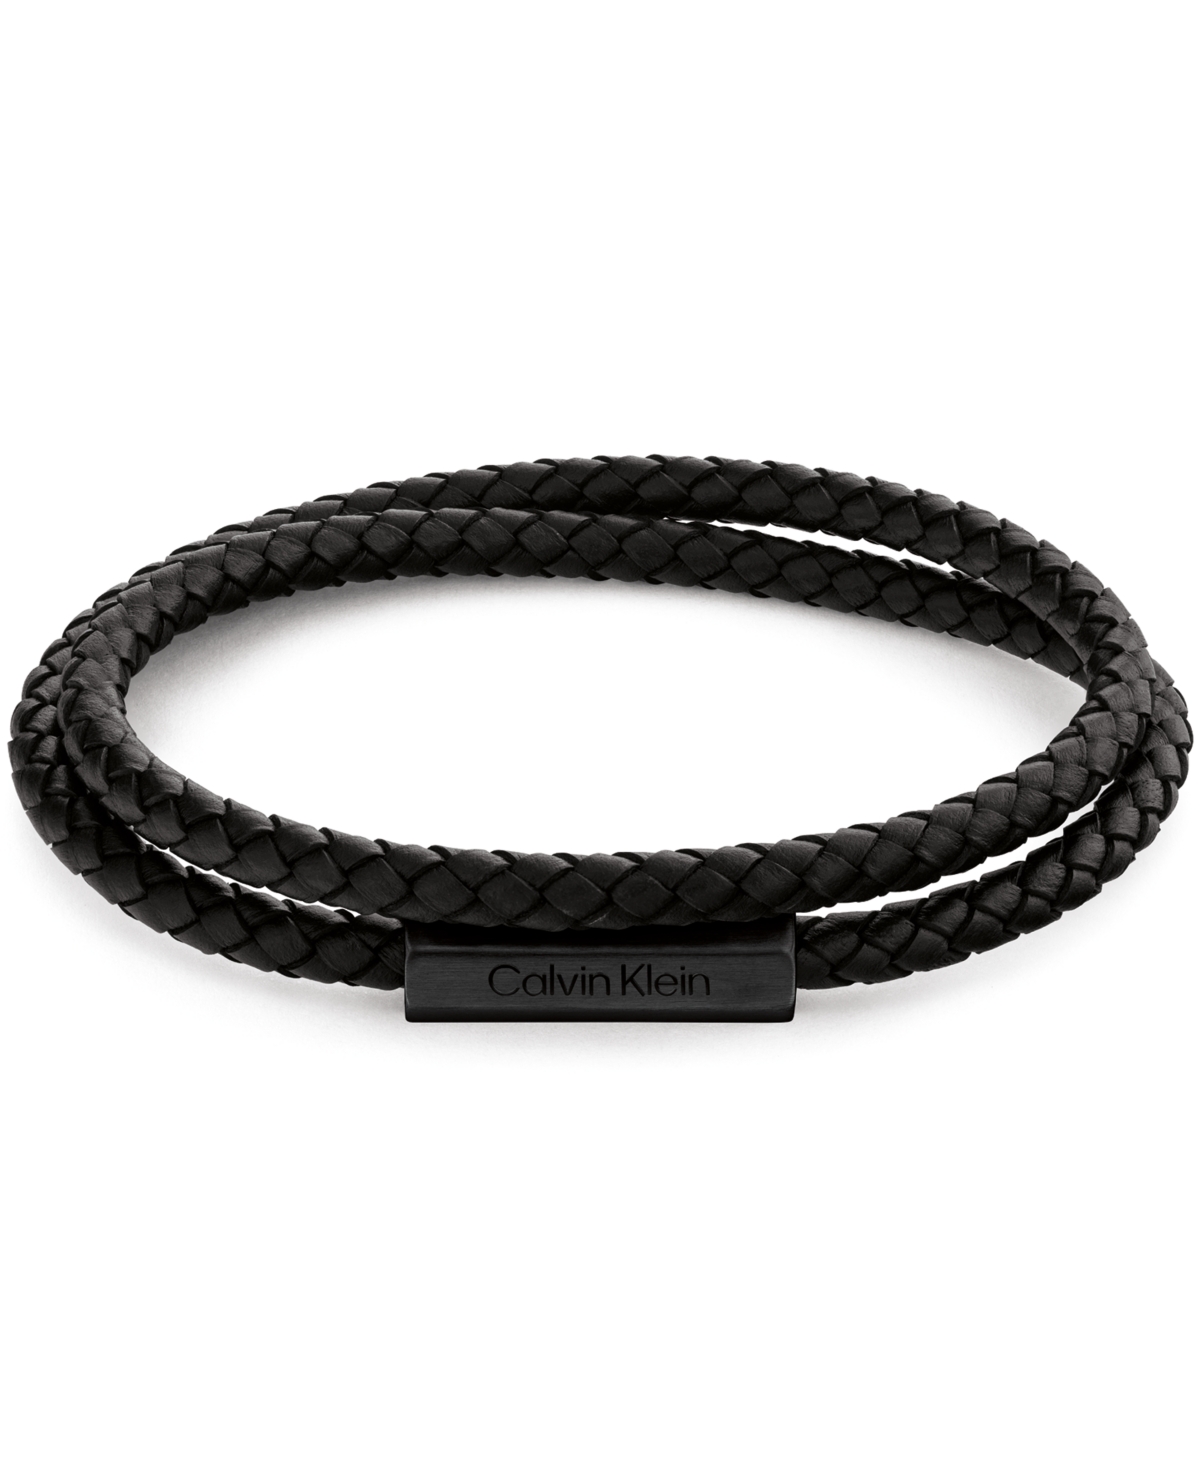 Men's Double Wrapped Leather Bracelet - Black